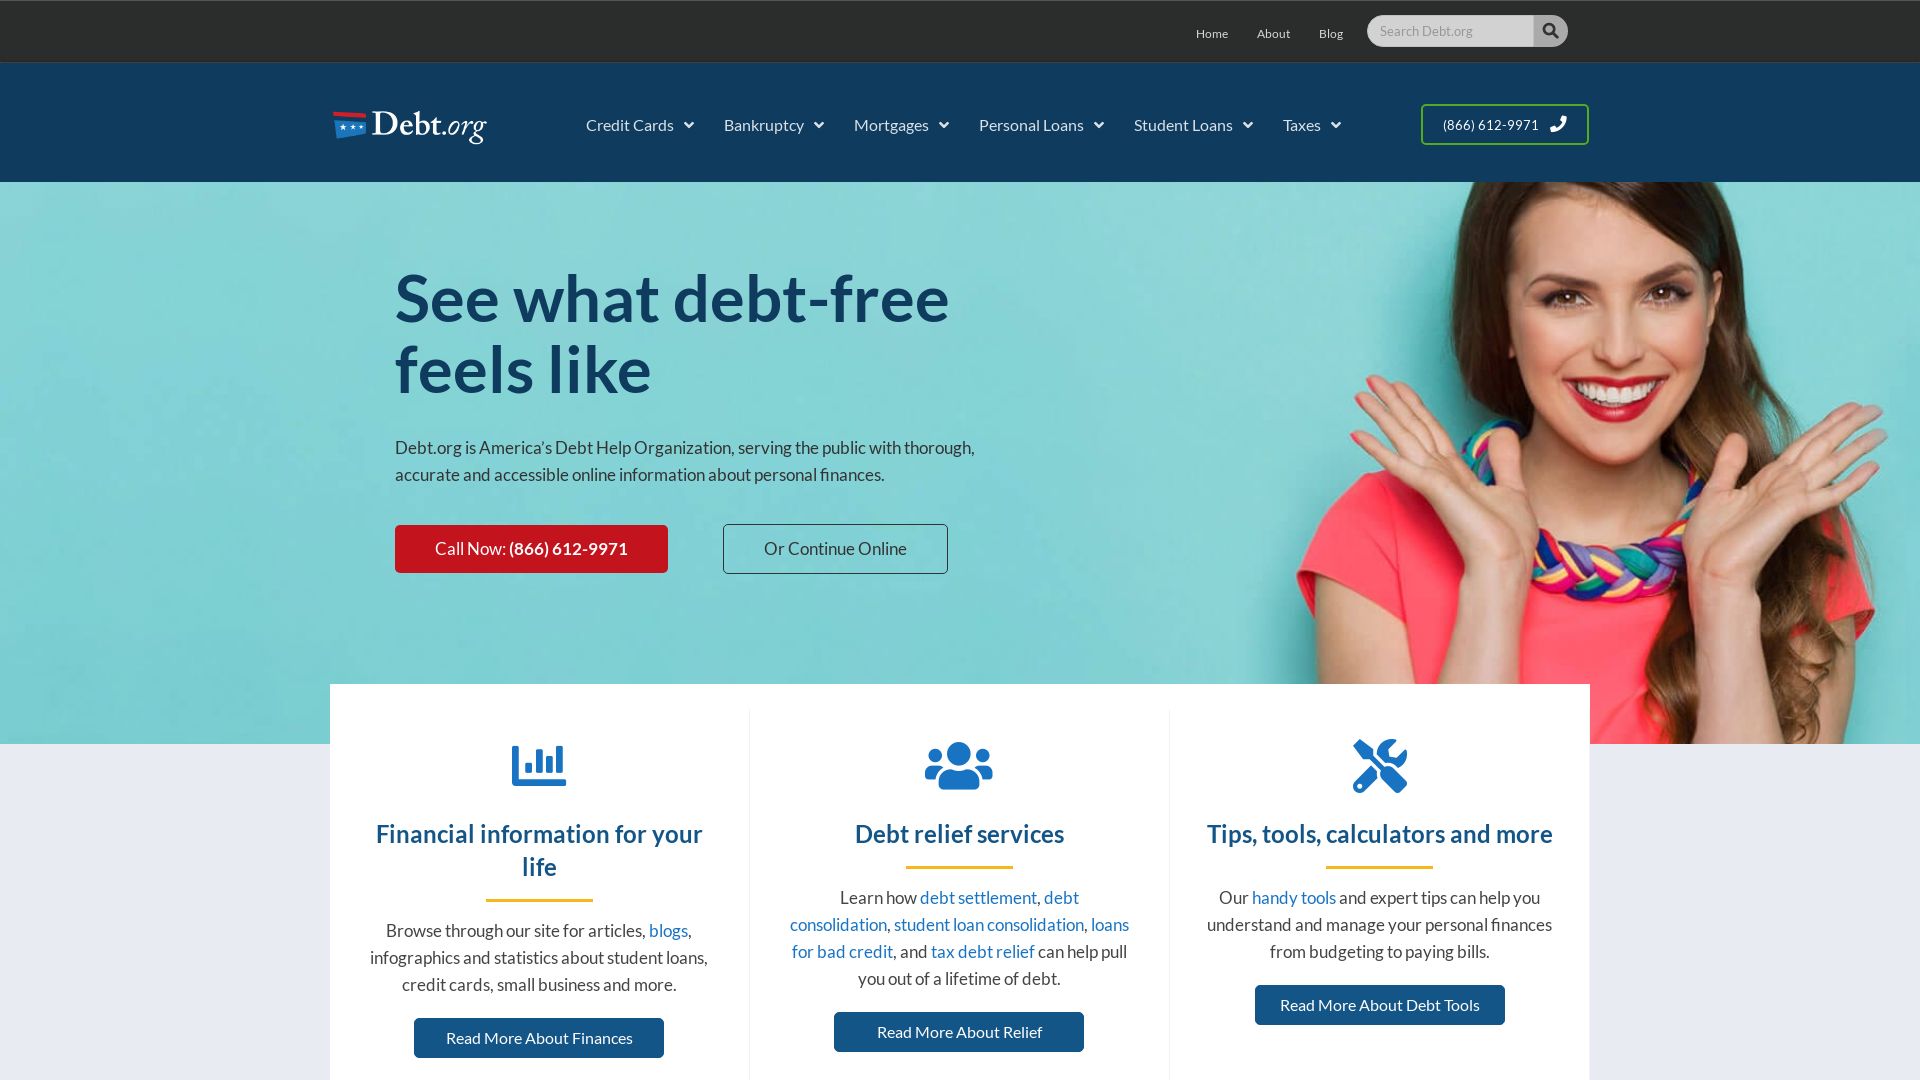 Website status debt.org is   ONLINE